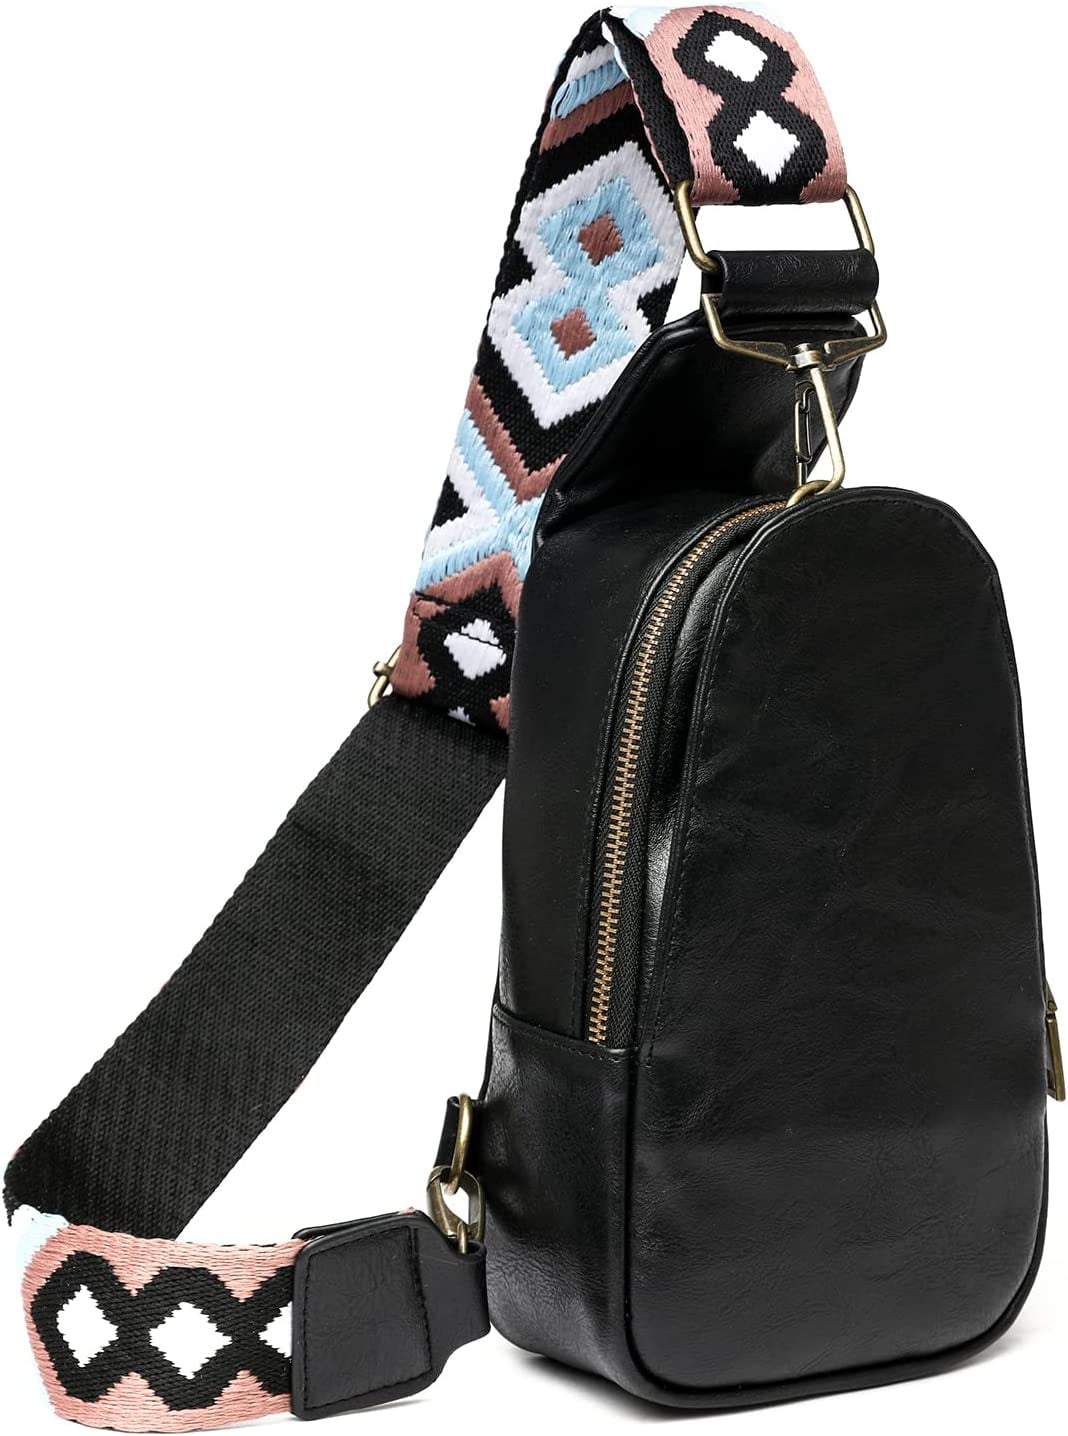 Crossbody Bag In Beige With Interchangeable Straps, B & Floss